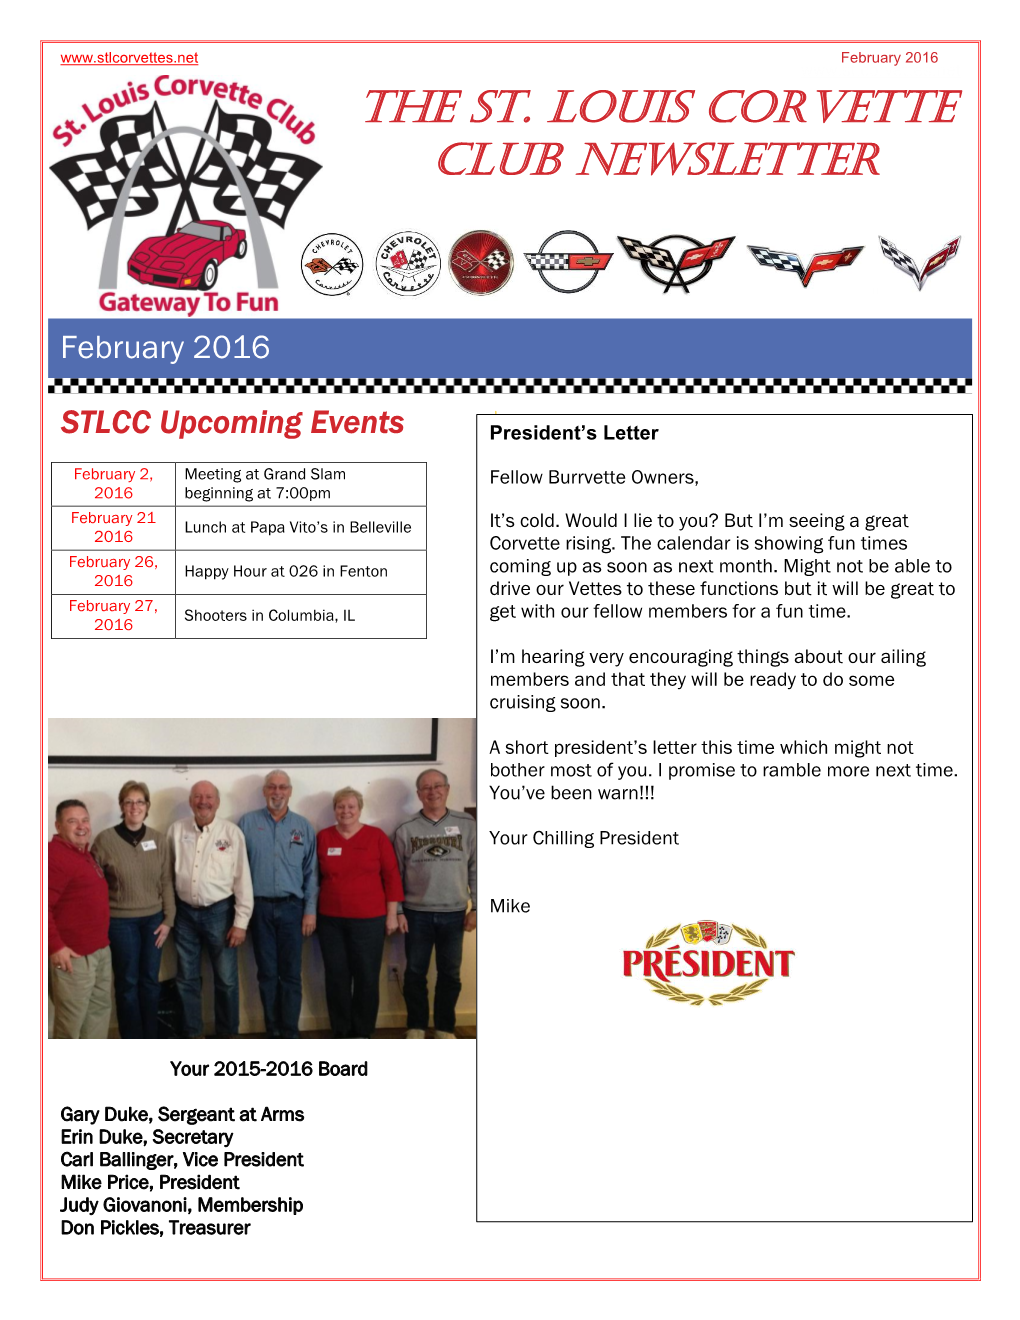 The St. Louis Corvette Club Newsletter